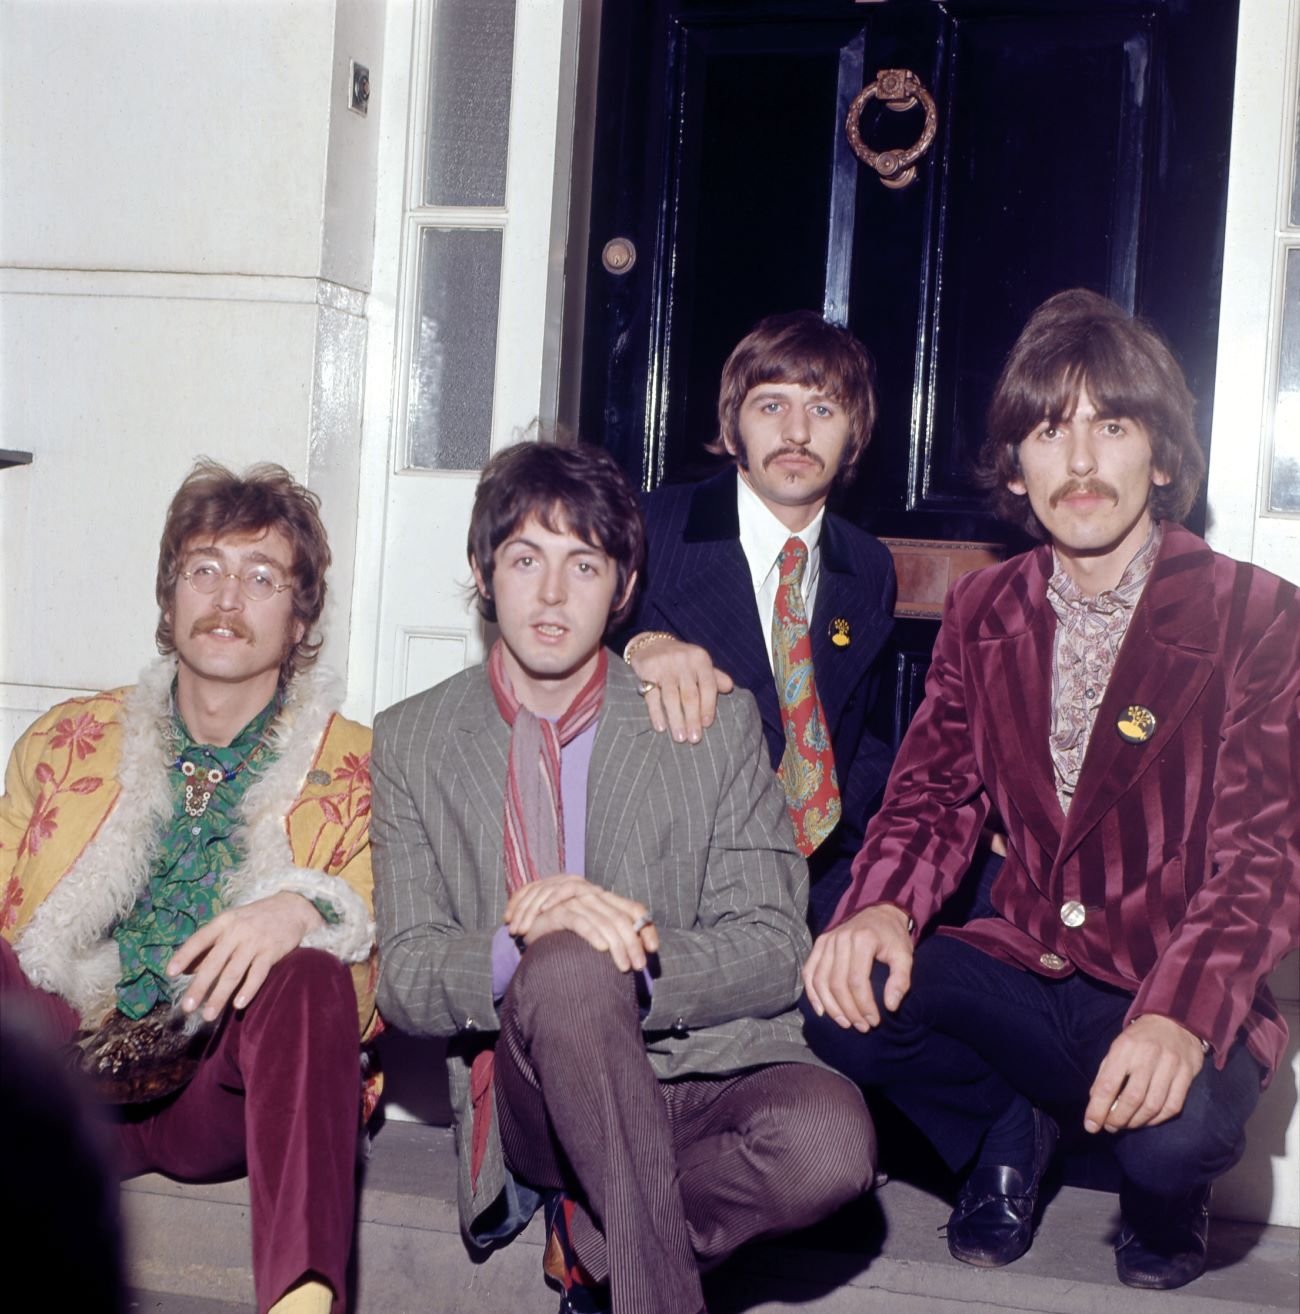 The Beatles, John Lennon, Paul McCartney, Ringo Starr, and George Harrison, sit on a doorstep.